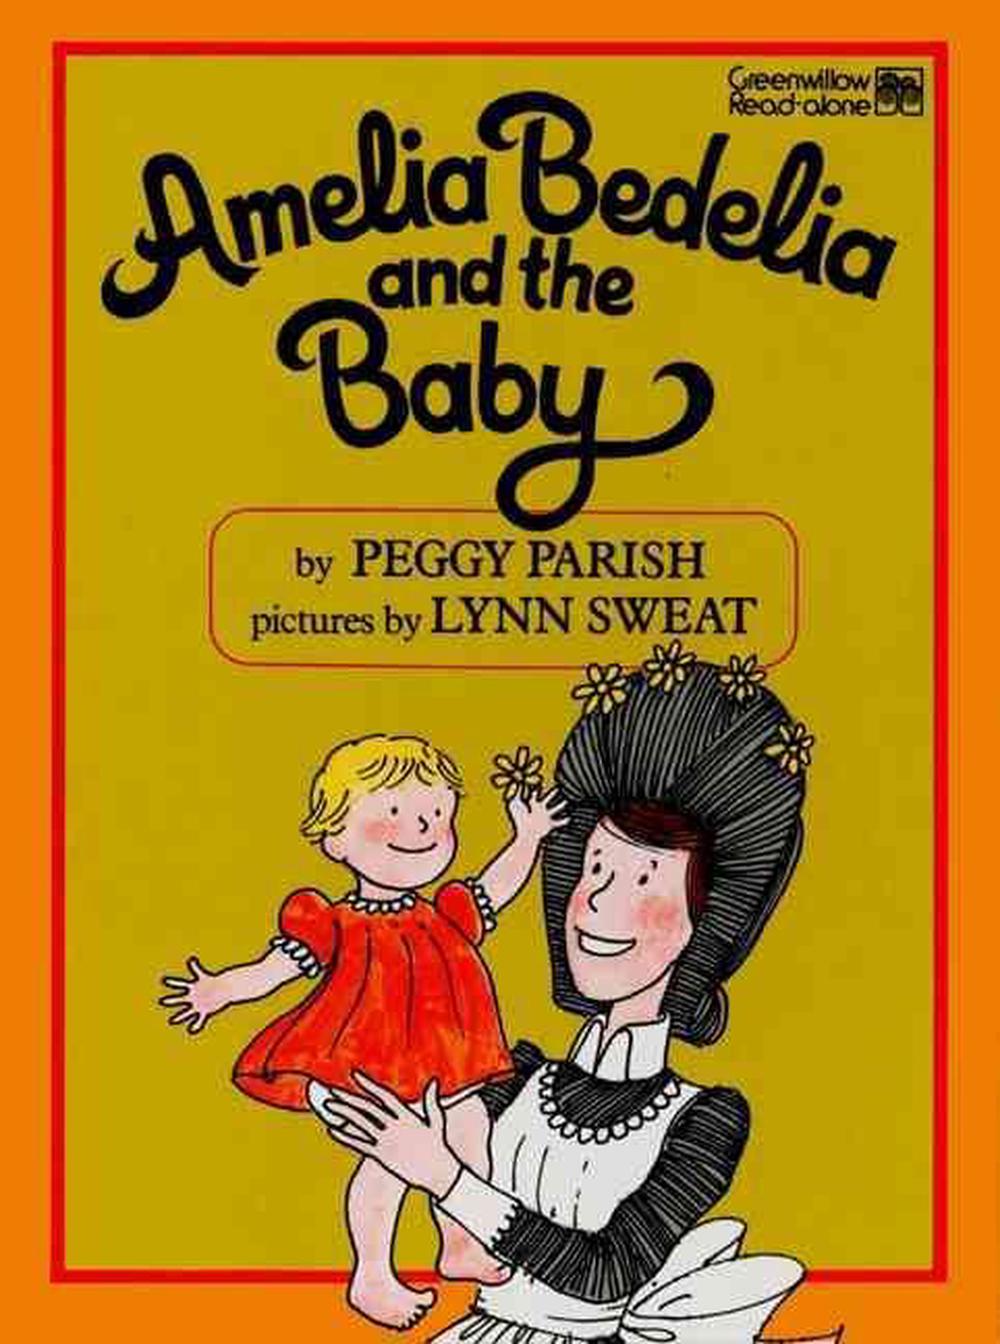 amelia bedelia books by peggy parish